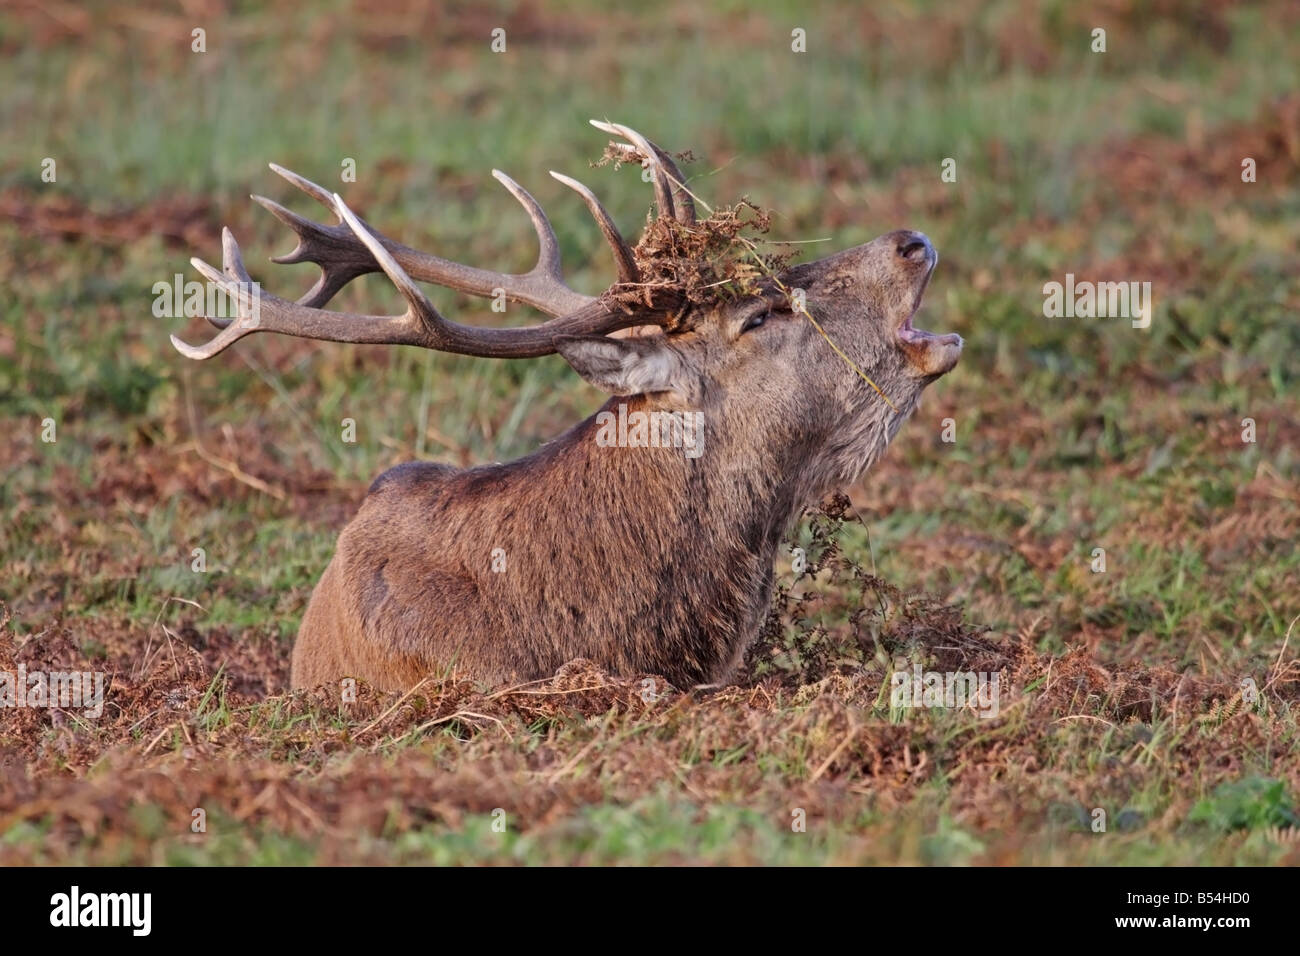 Ciervo rojo Cervus elaphus ciervo bramido durante la rutina Foto de stock